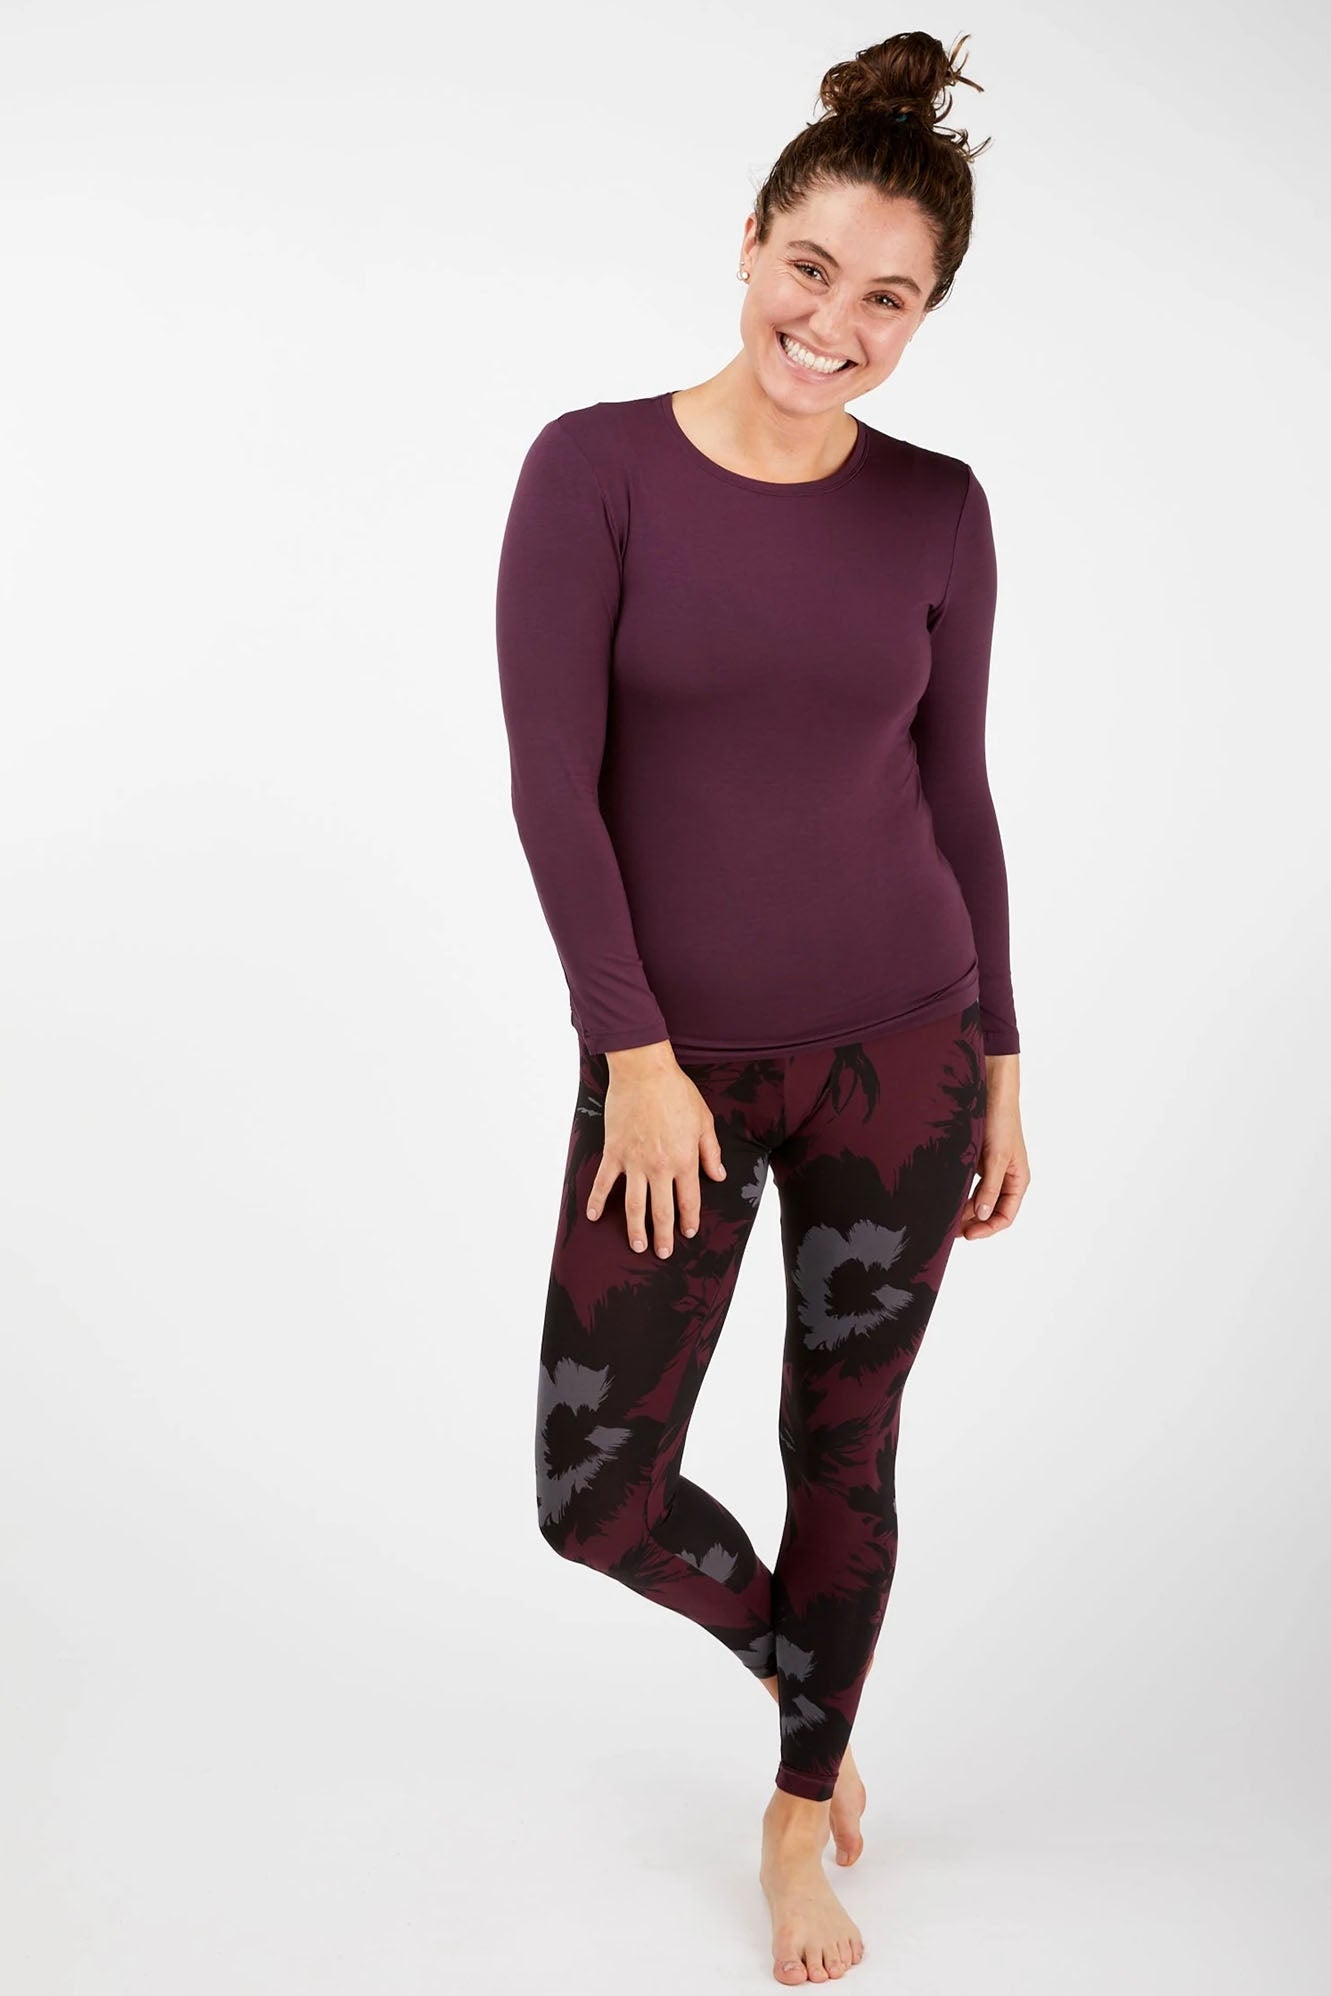 Woman wearing Tani 89118 leggings in Bloom